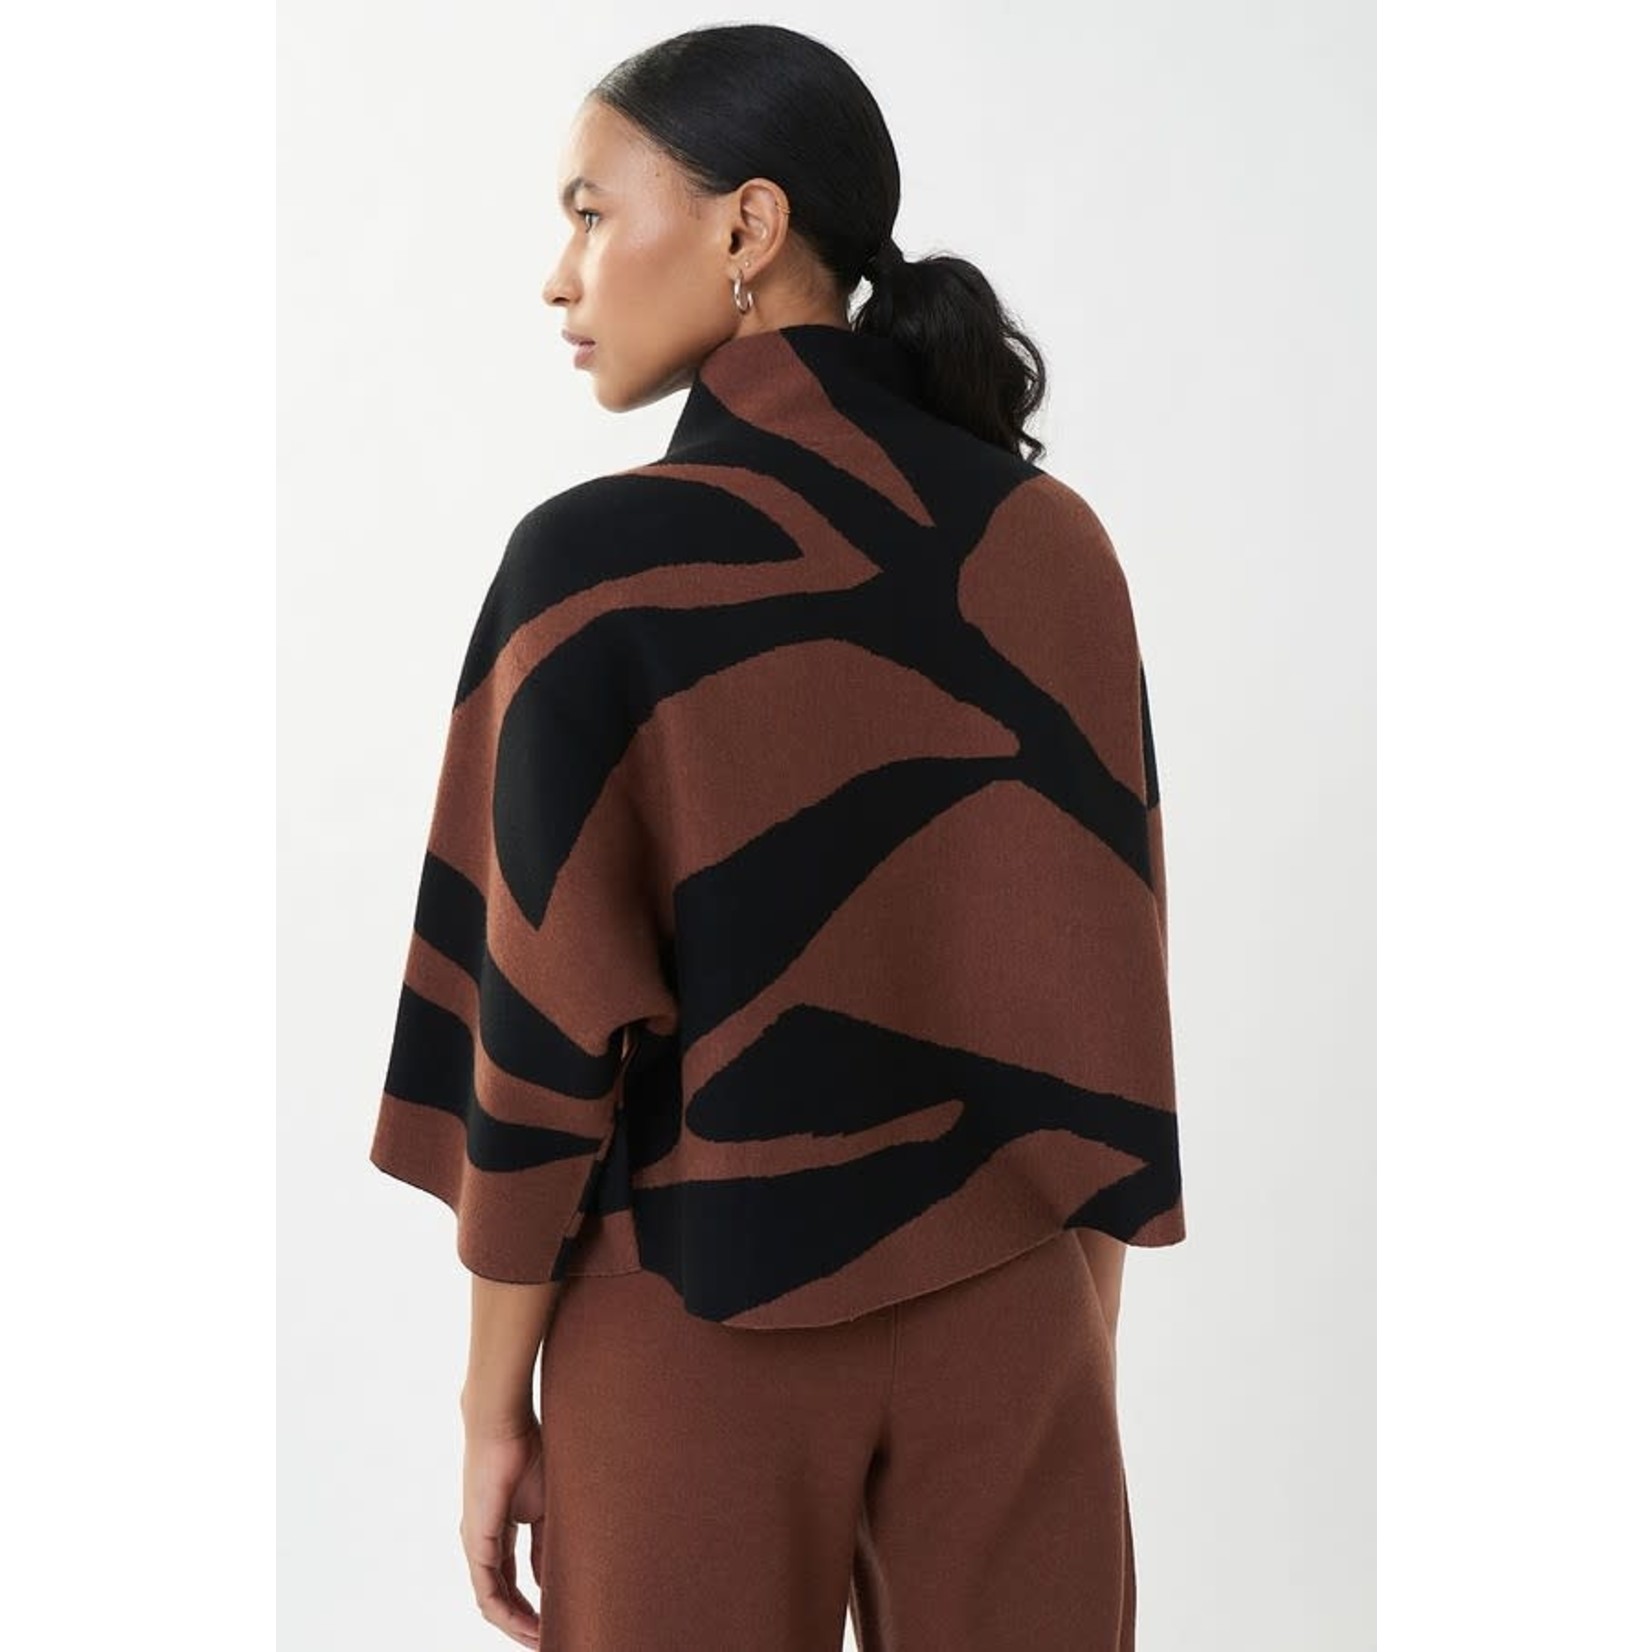 Joseph Ribkoff Jacquard Sweater Style 223945